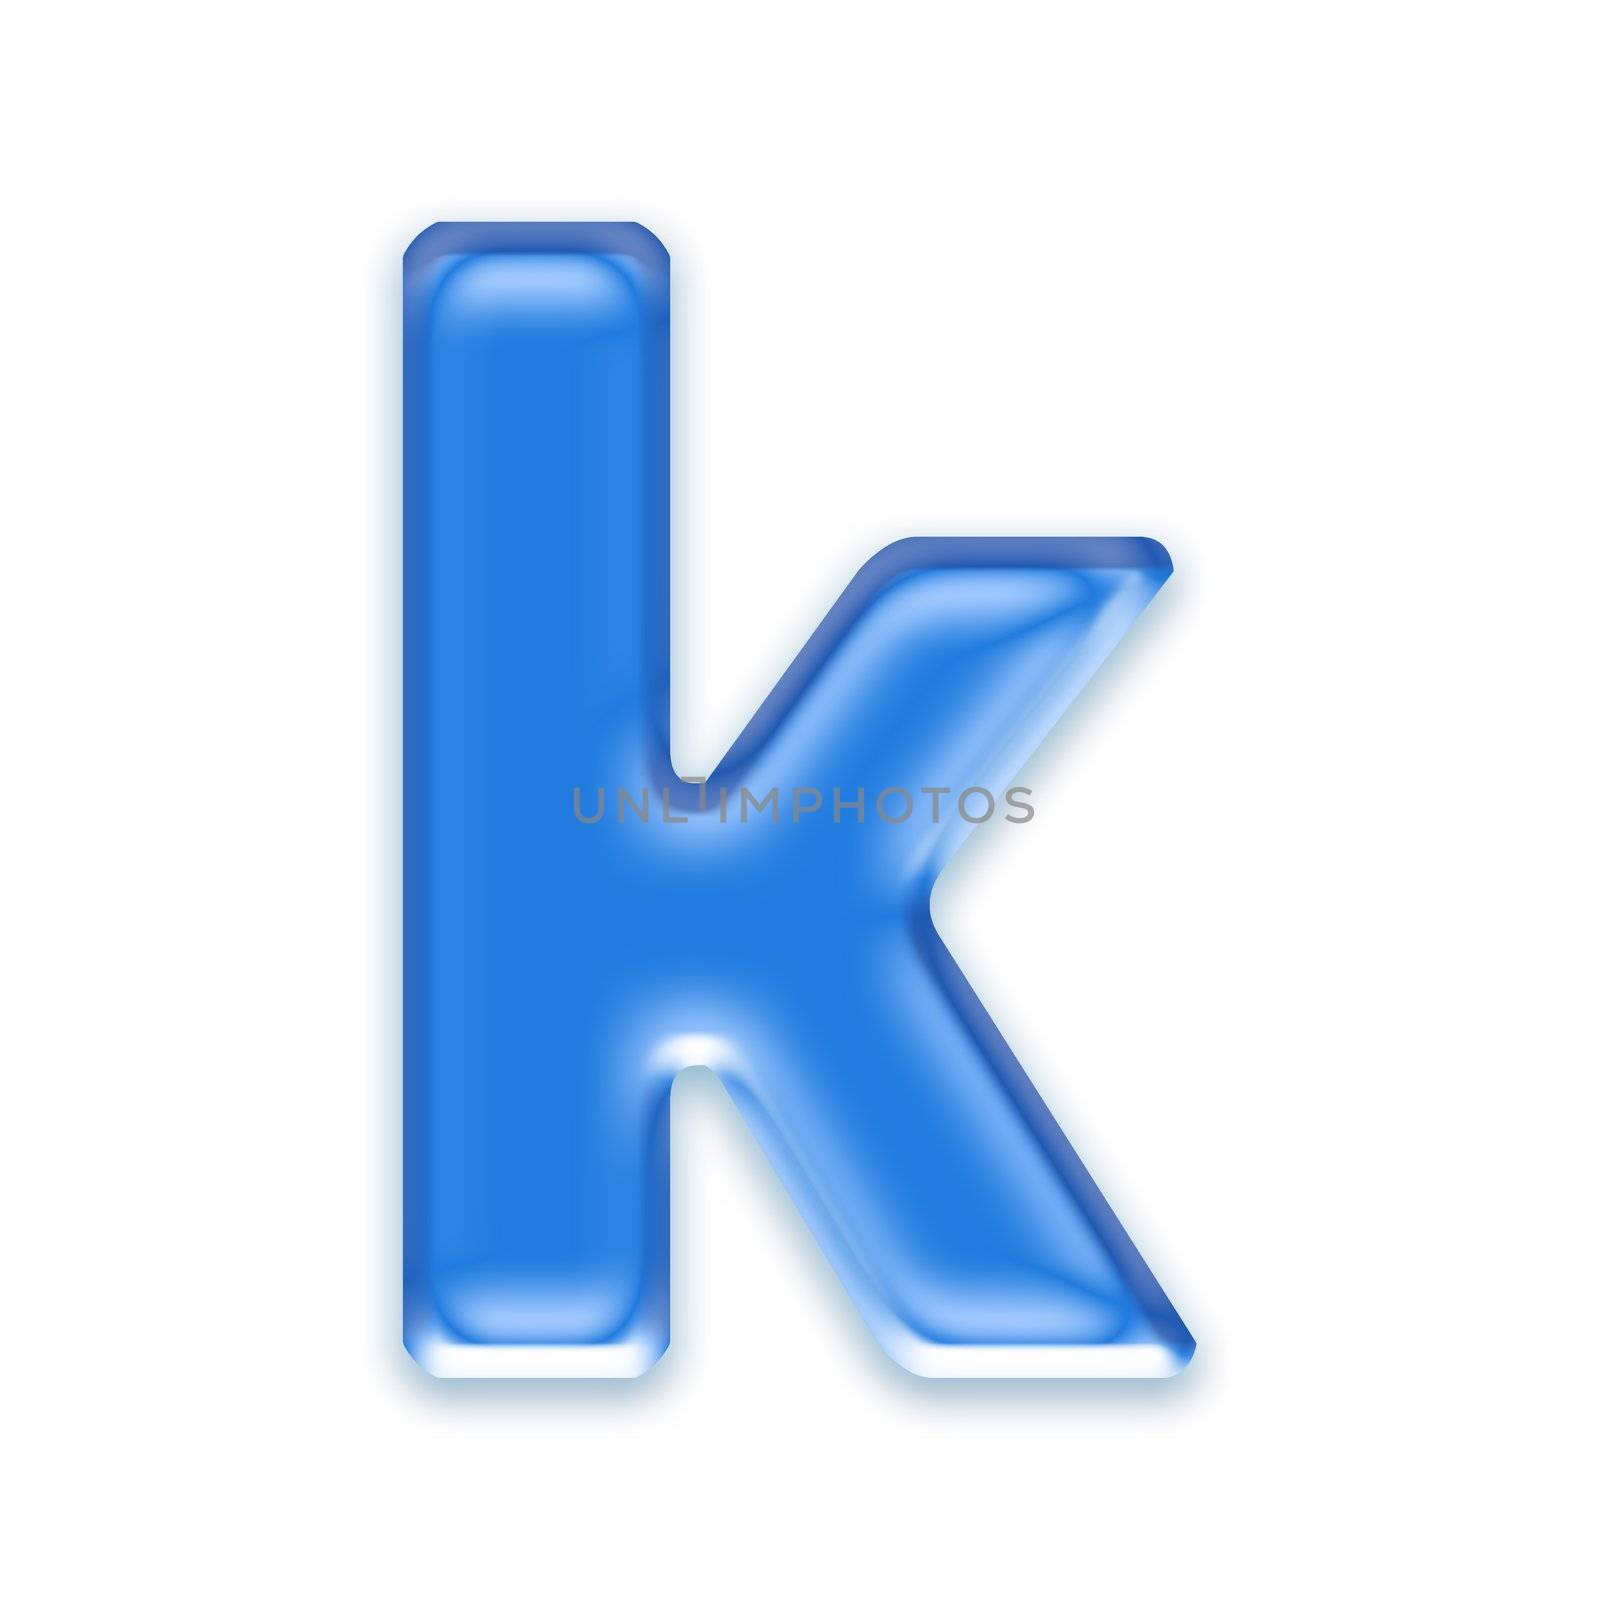 Aqua letter isolated on white background  - k by chrisroll